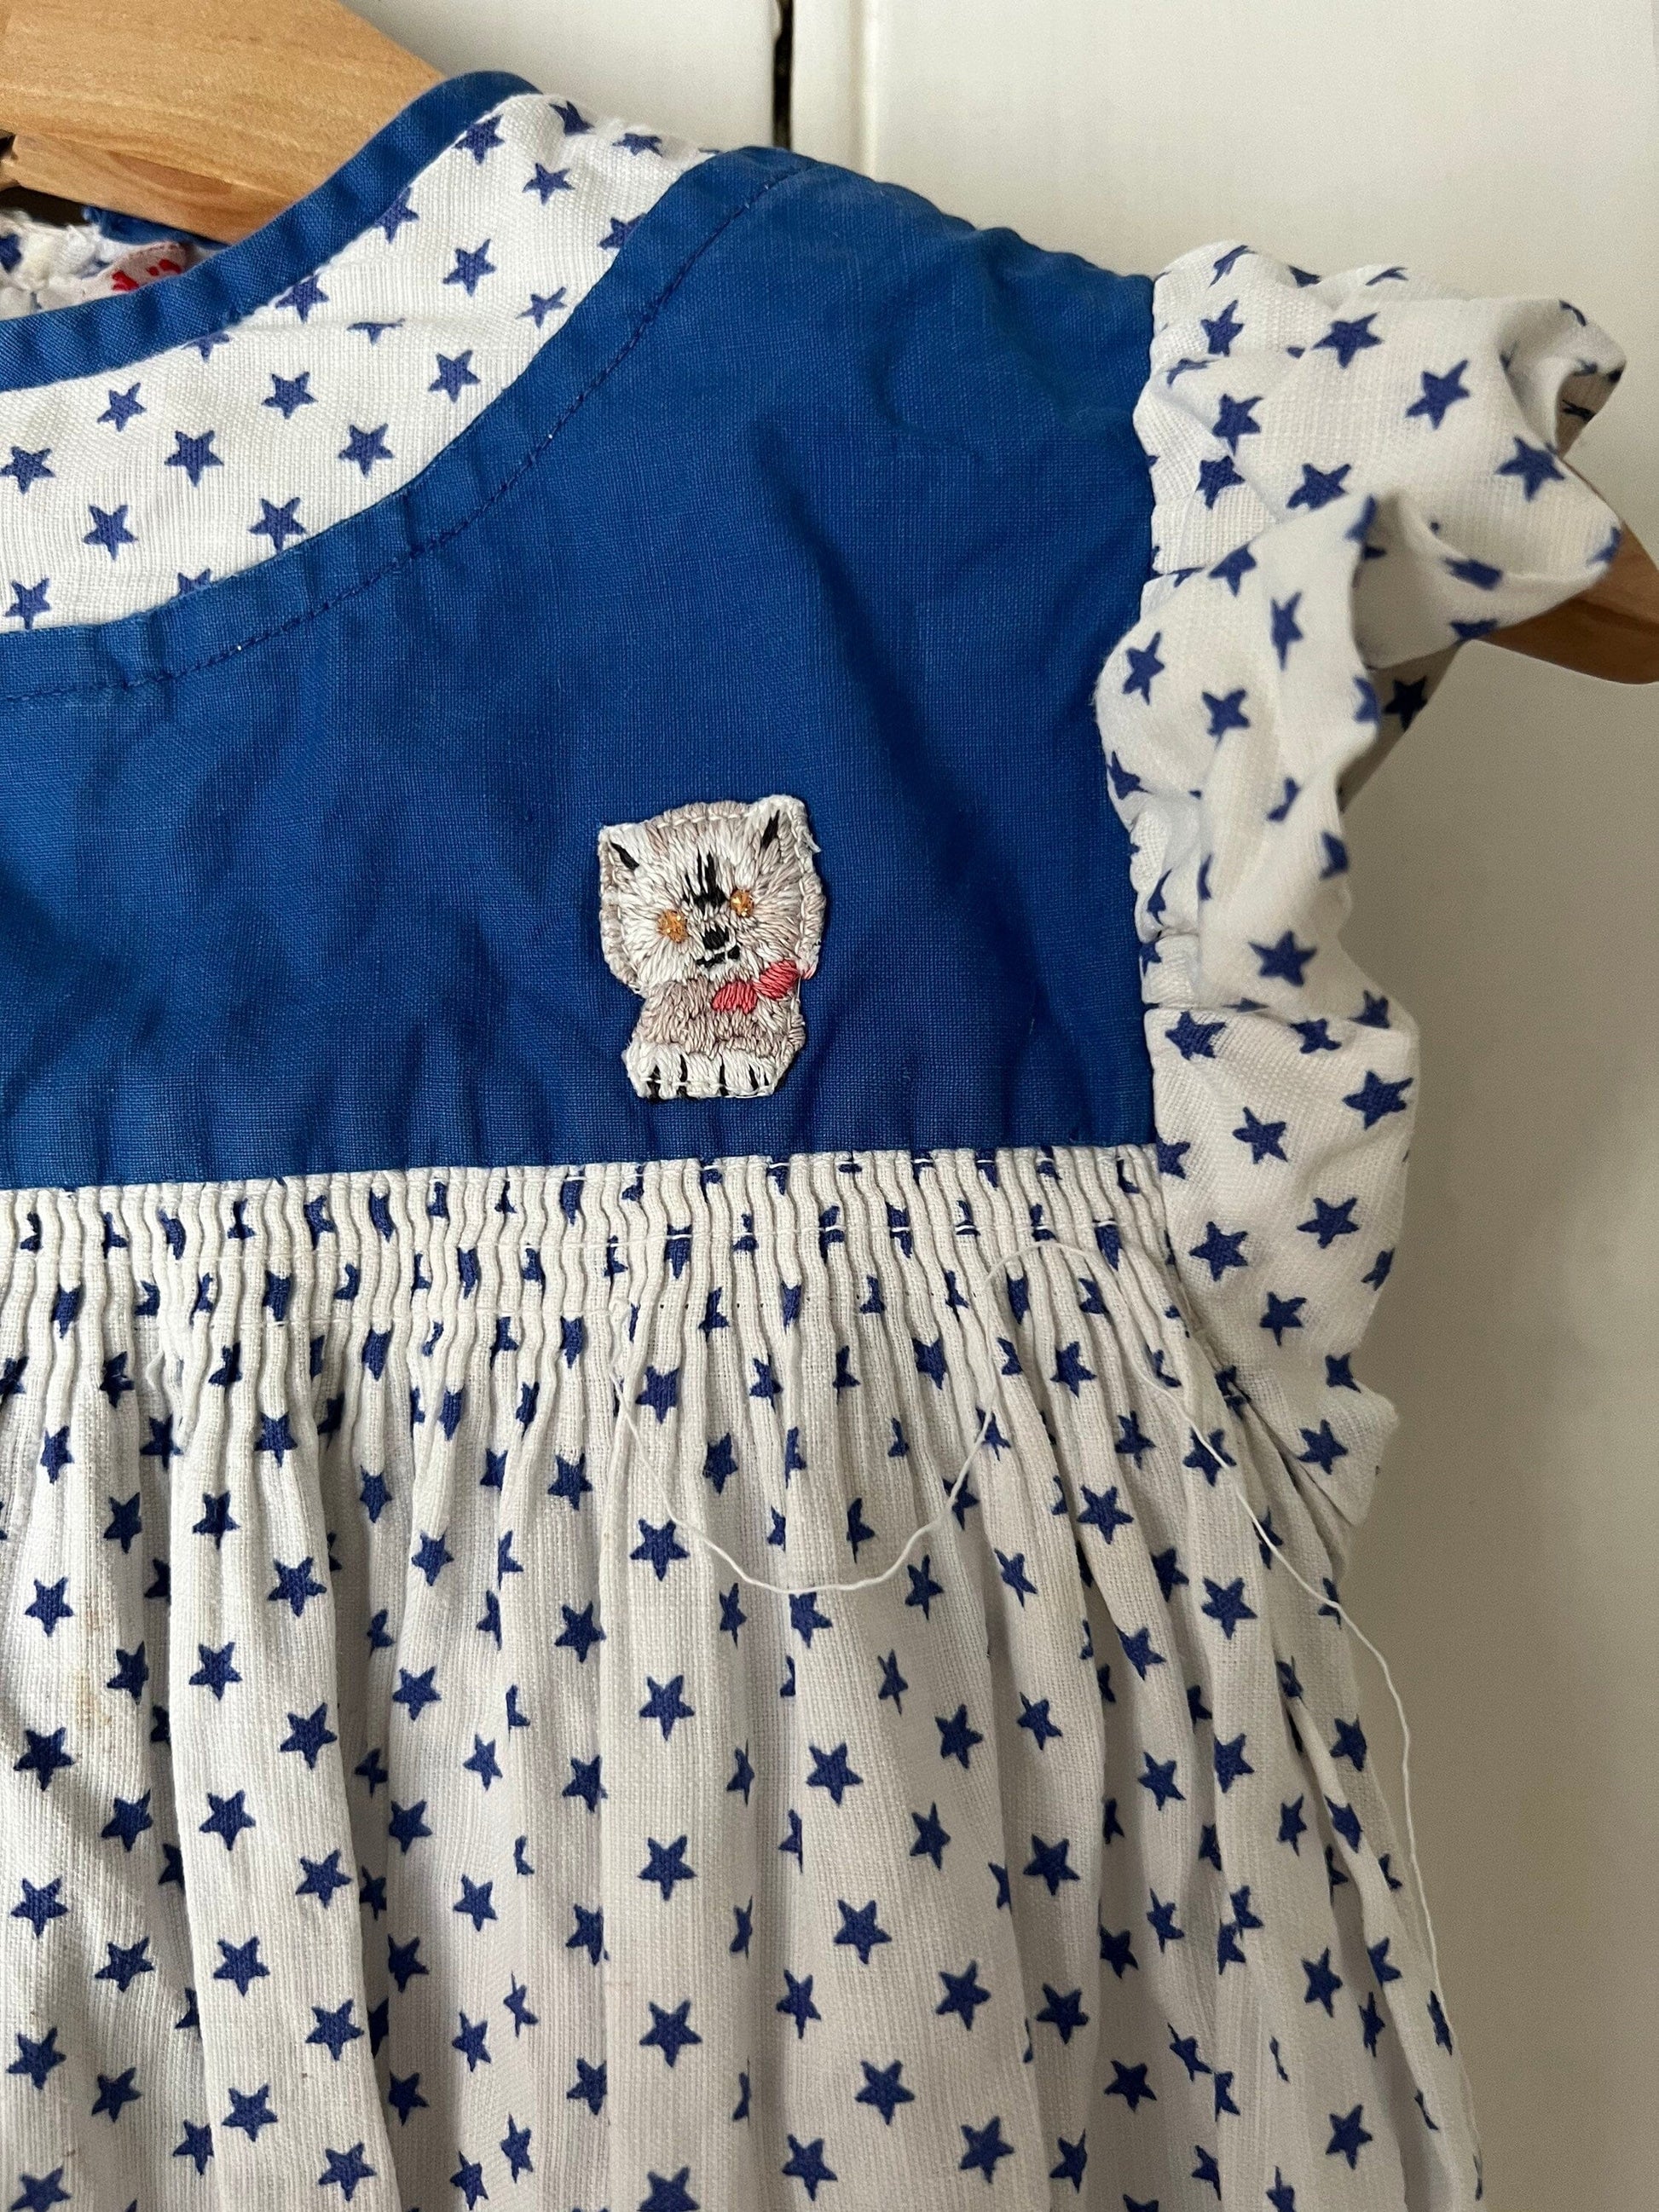 Vintage Girls Dress - Blue Star Patter Dress Baby Dress 2-3 years